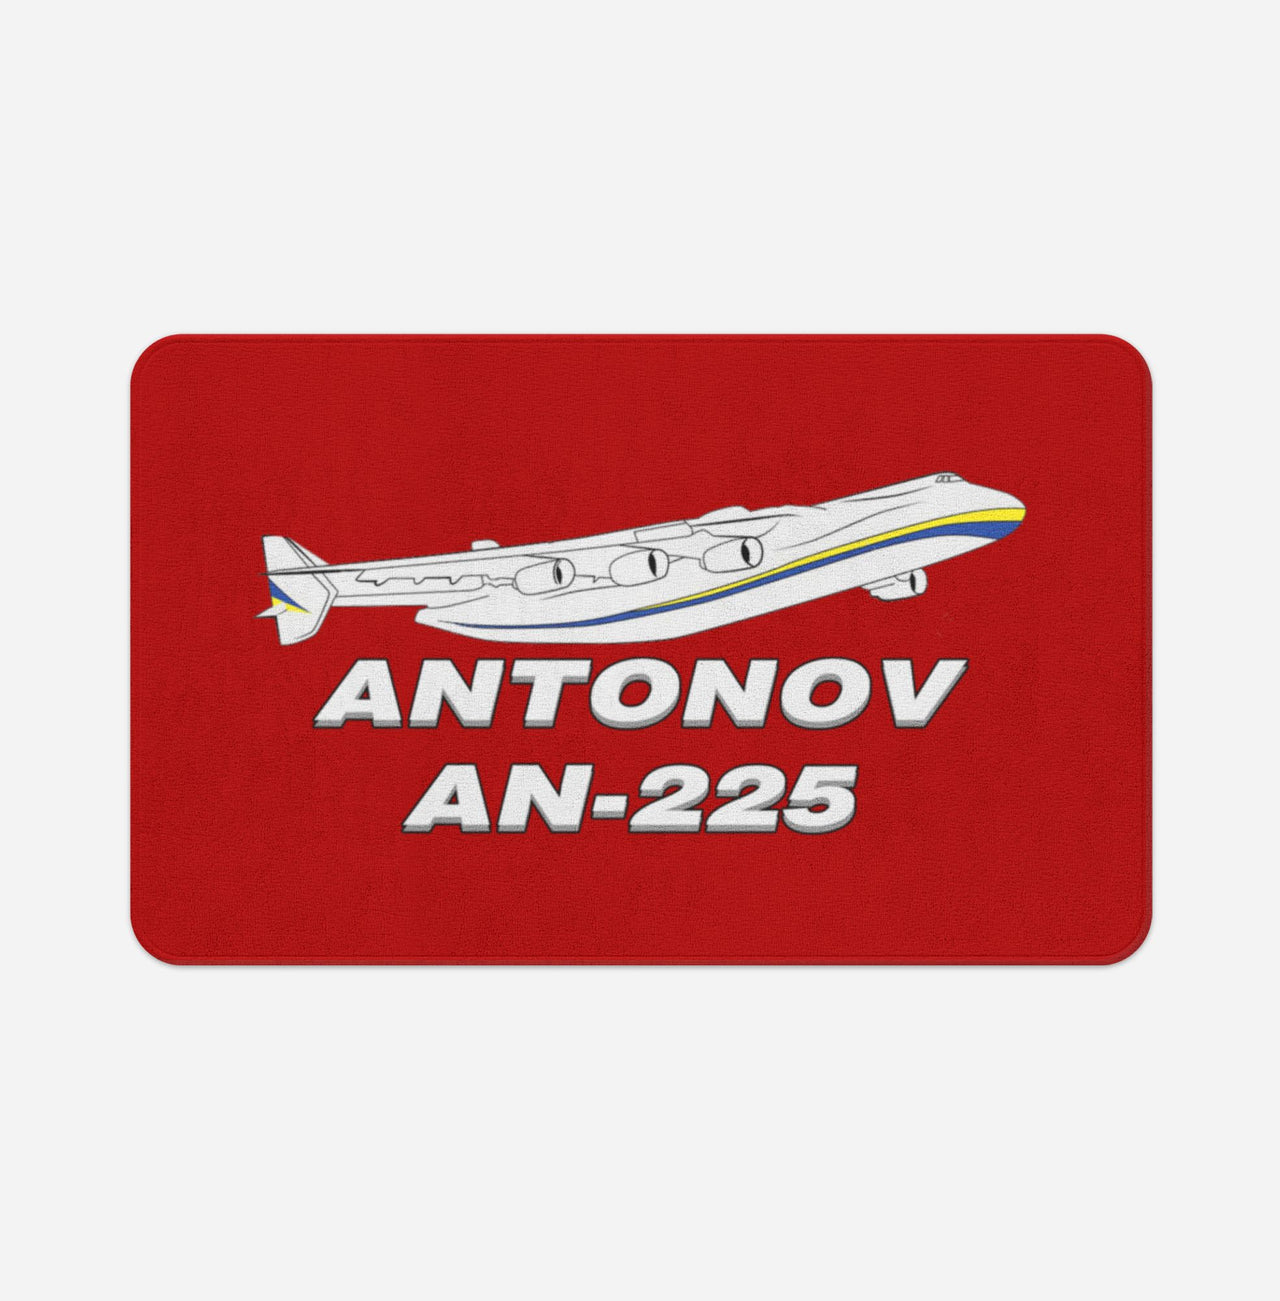 Antonov AN-225 (27) Designed Bath Mats